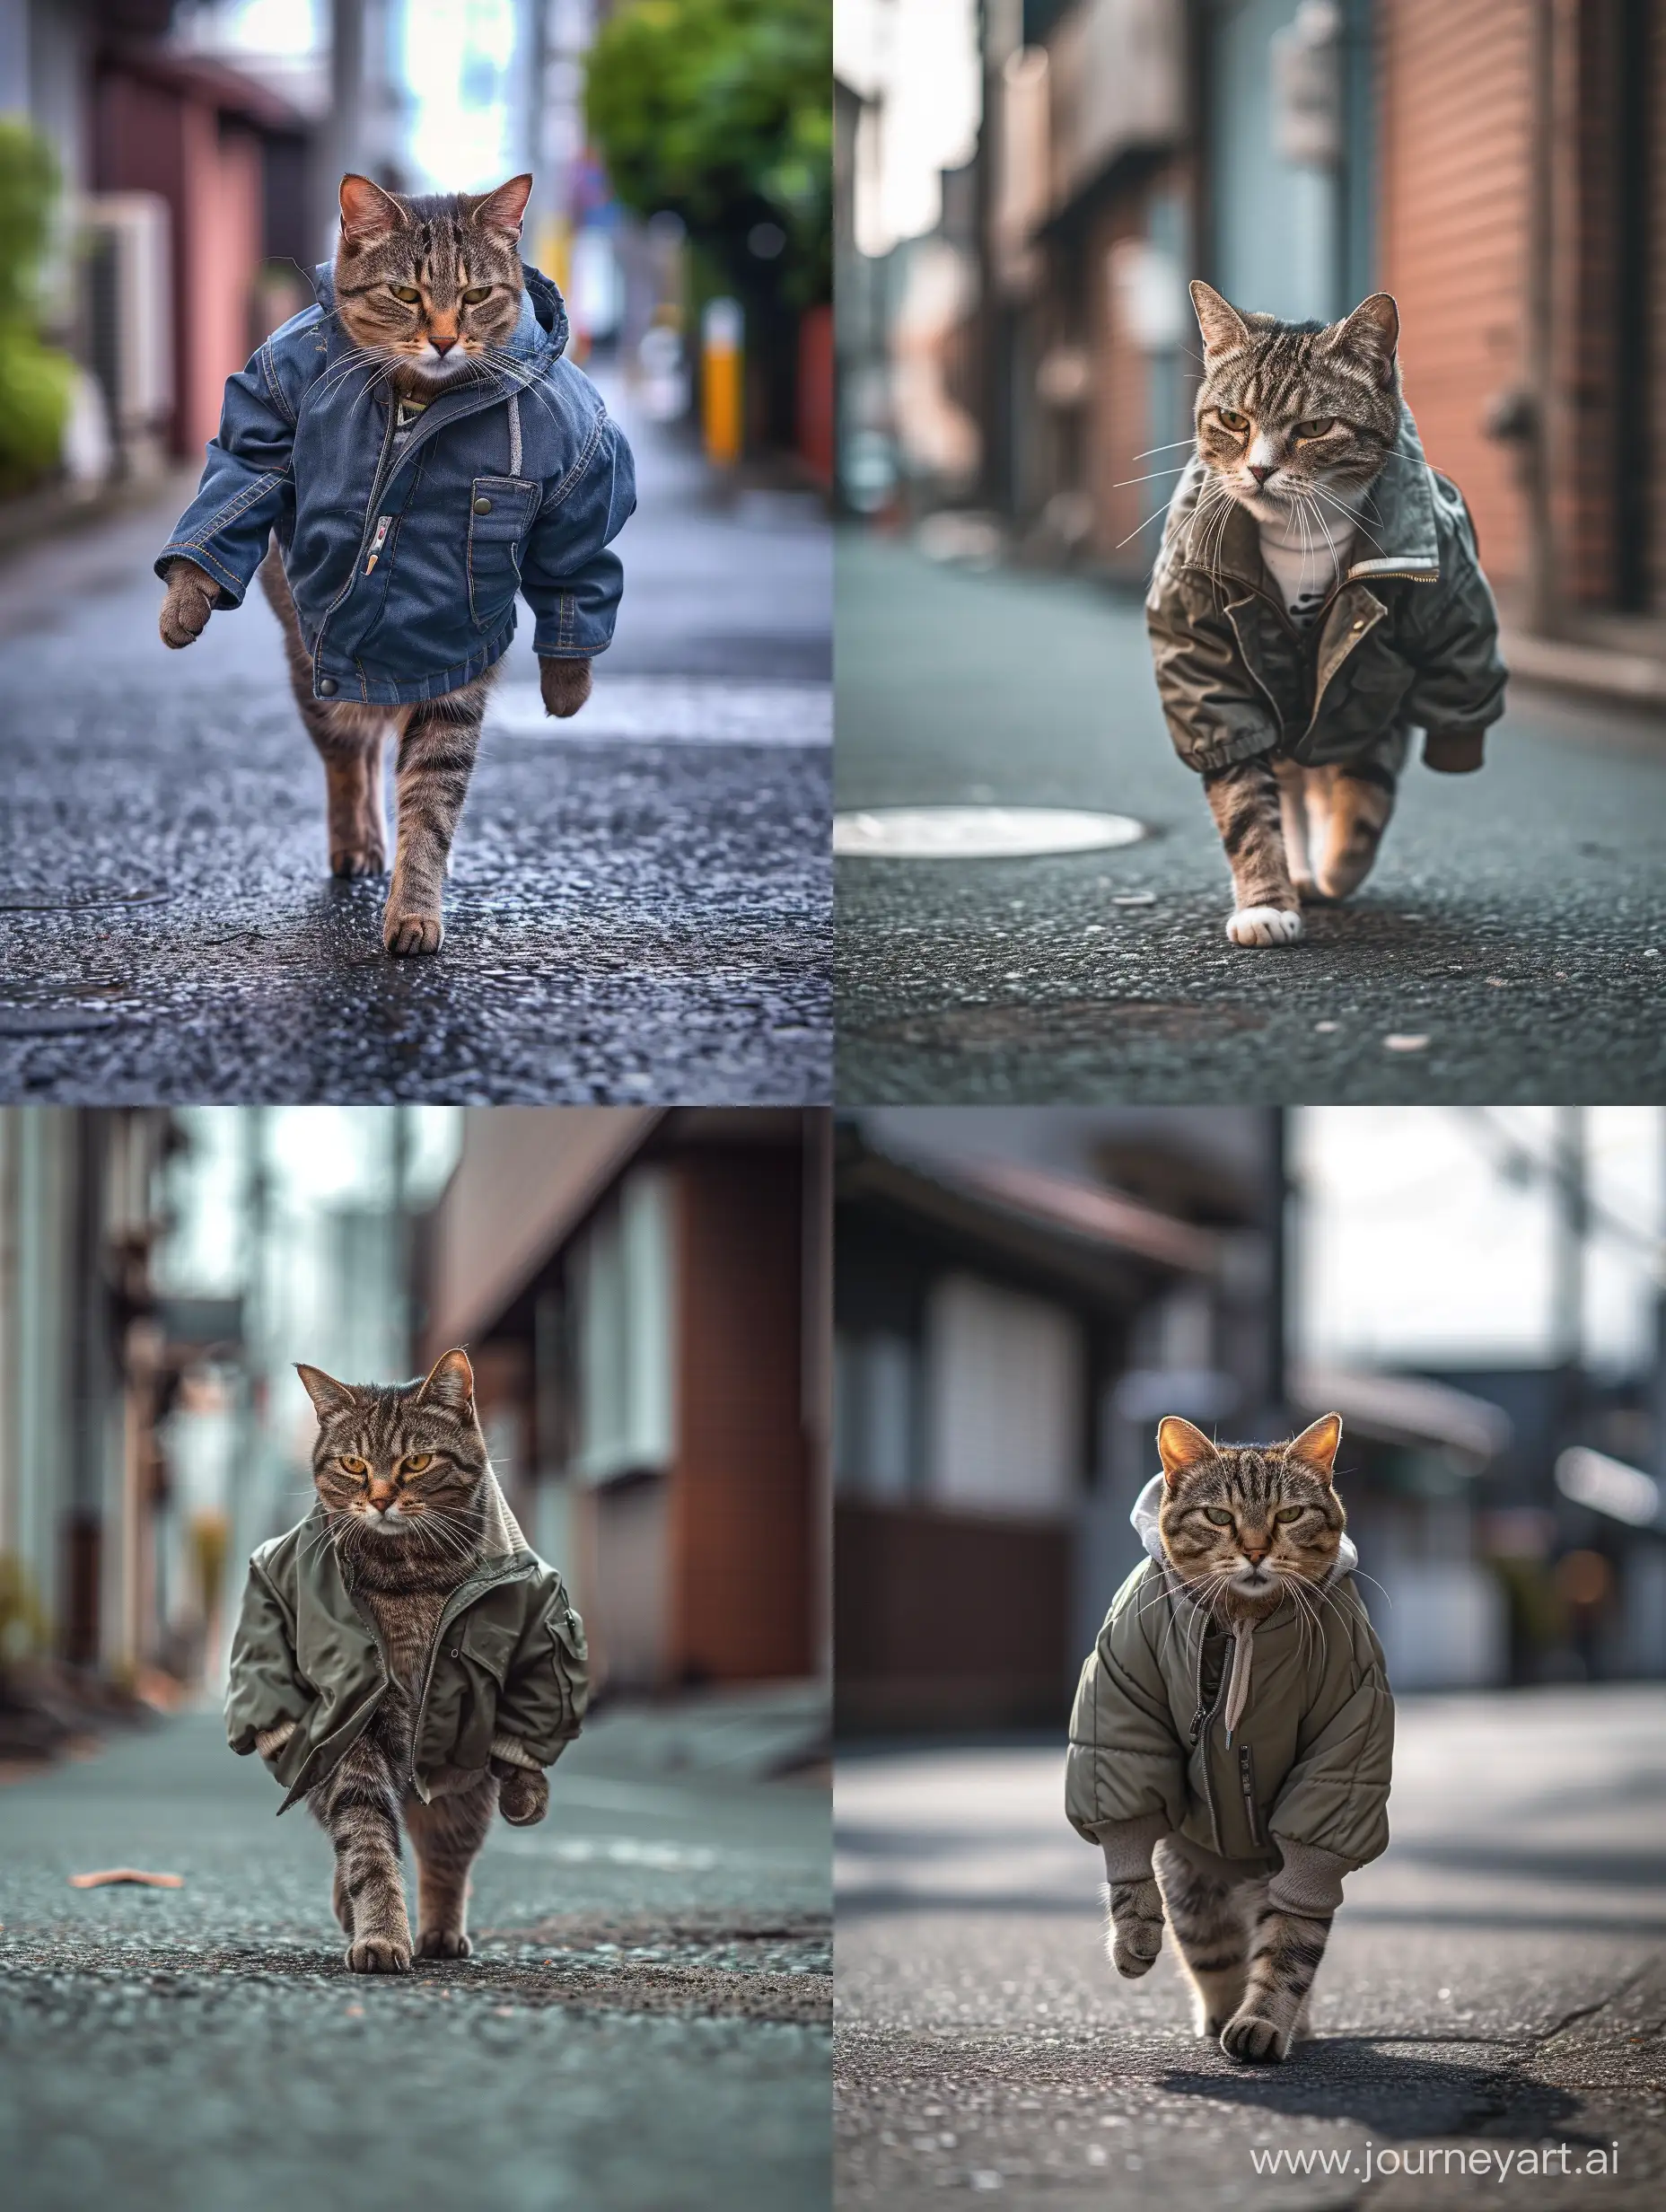 Fashionable-Cat-Struts-Down-the-Street-in-Stylish-Jacket